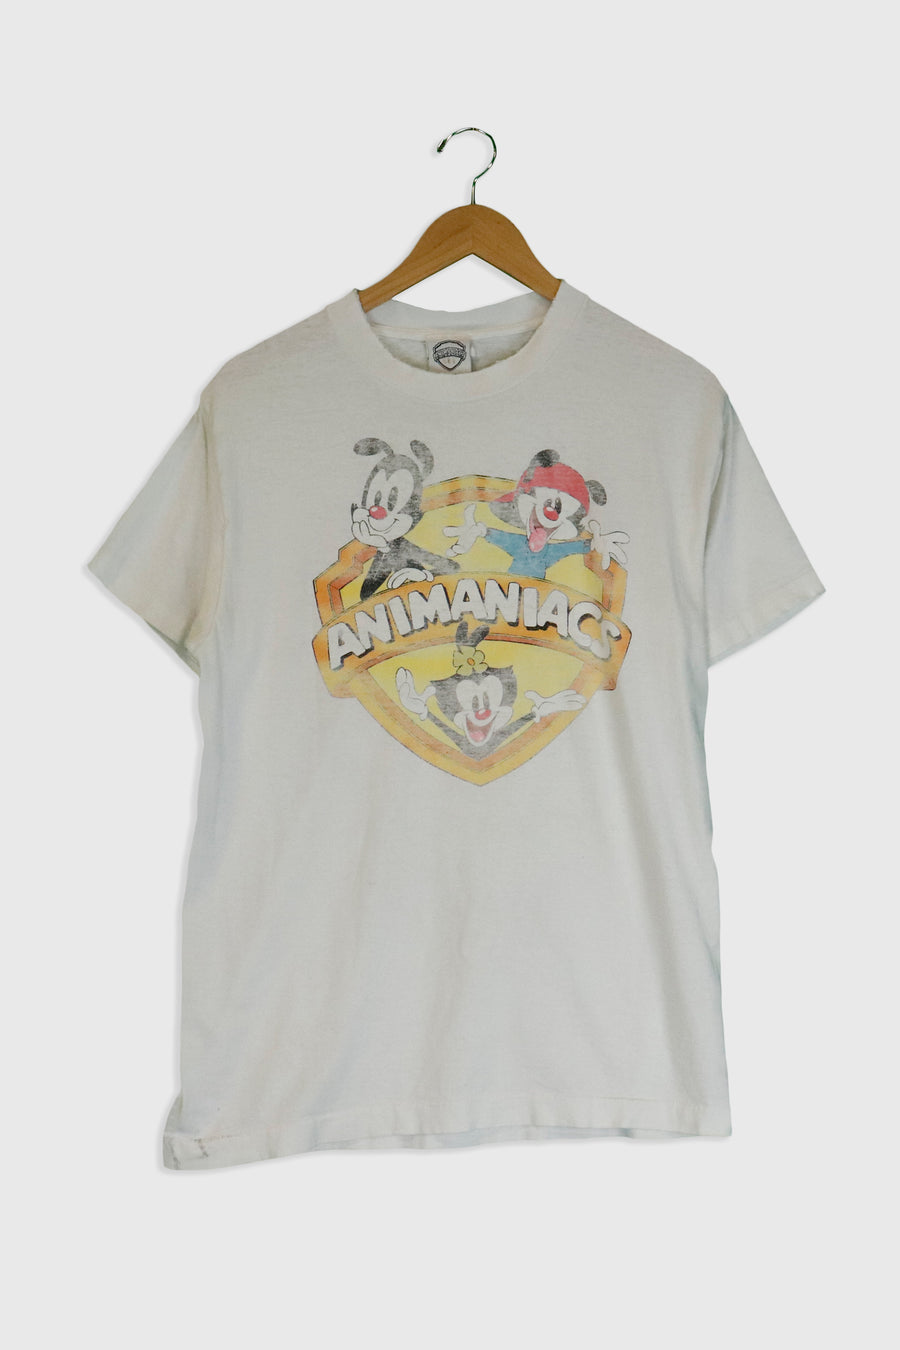 Vintage Animaniacs Graphic T Shirt Sz L